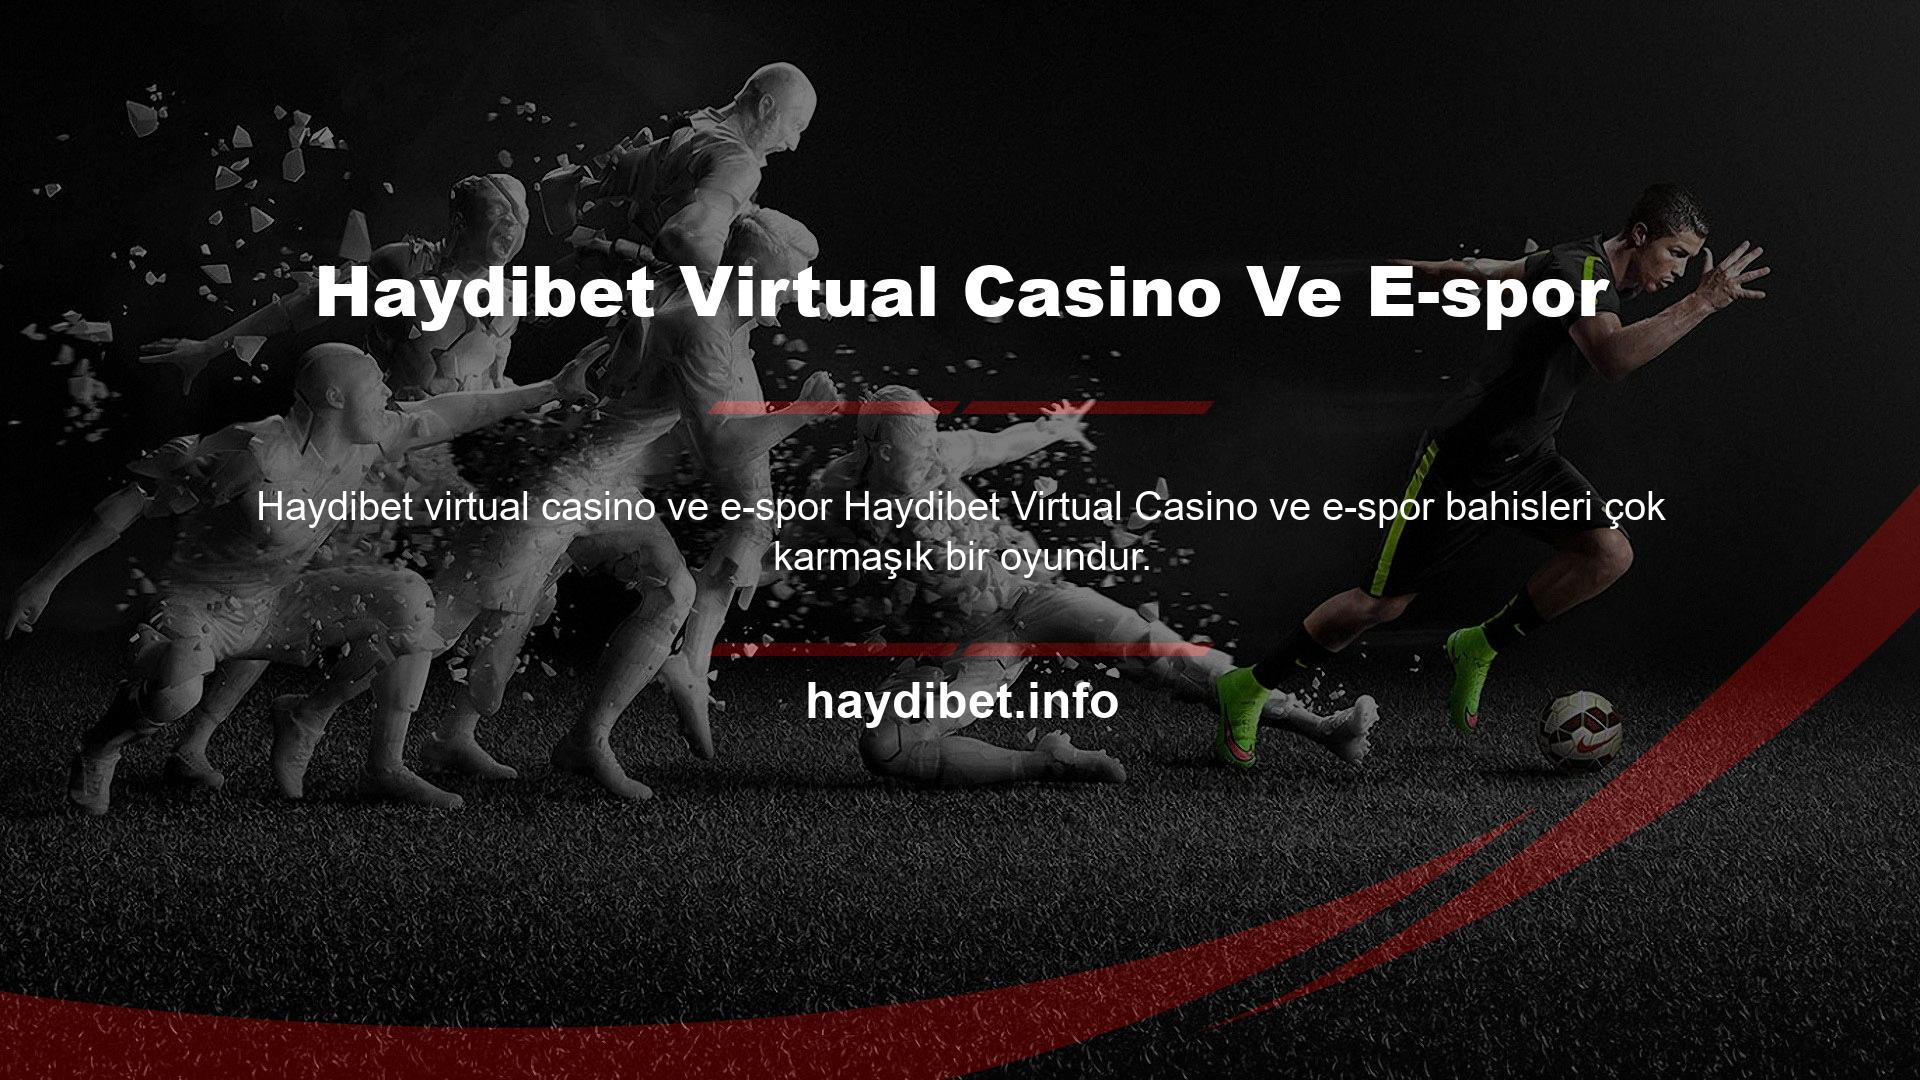 Haydibet Virtual Casino Ve E-spor